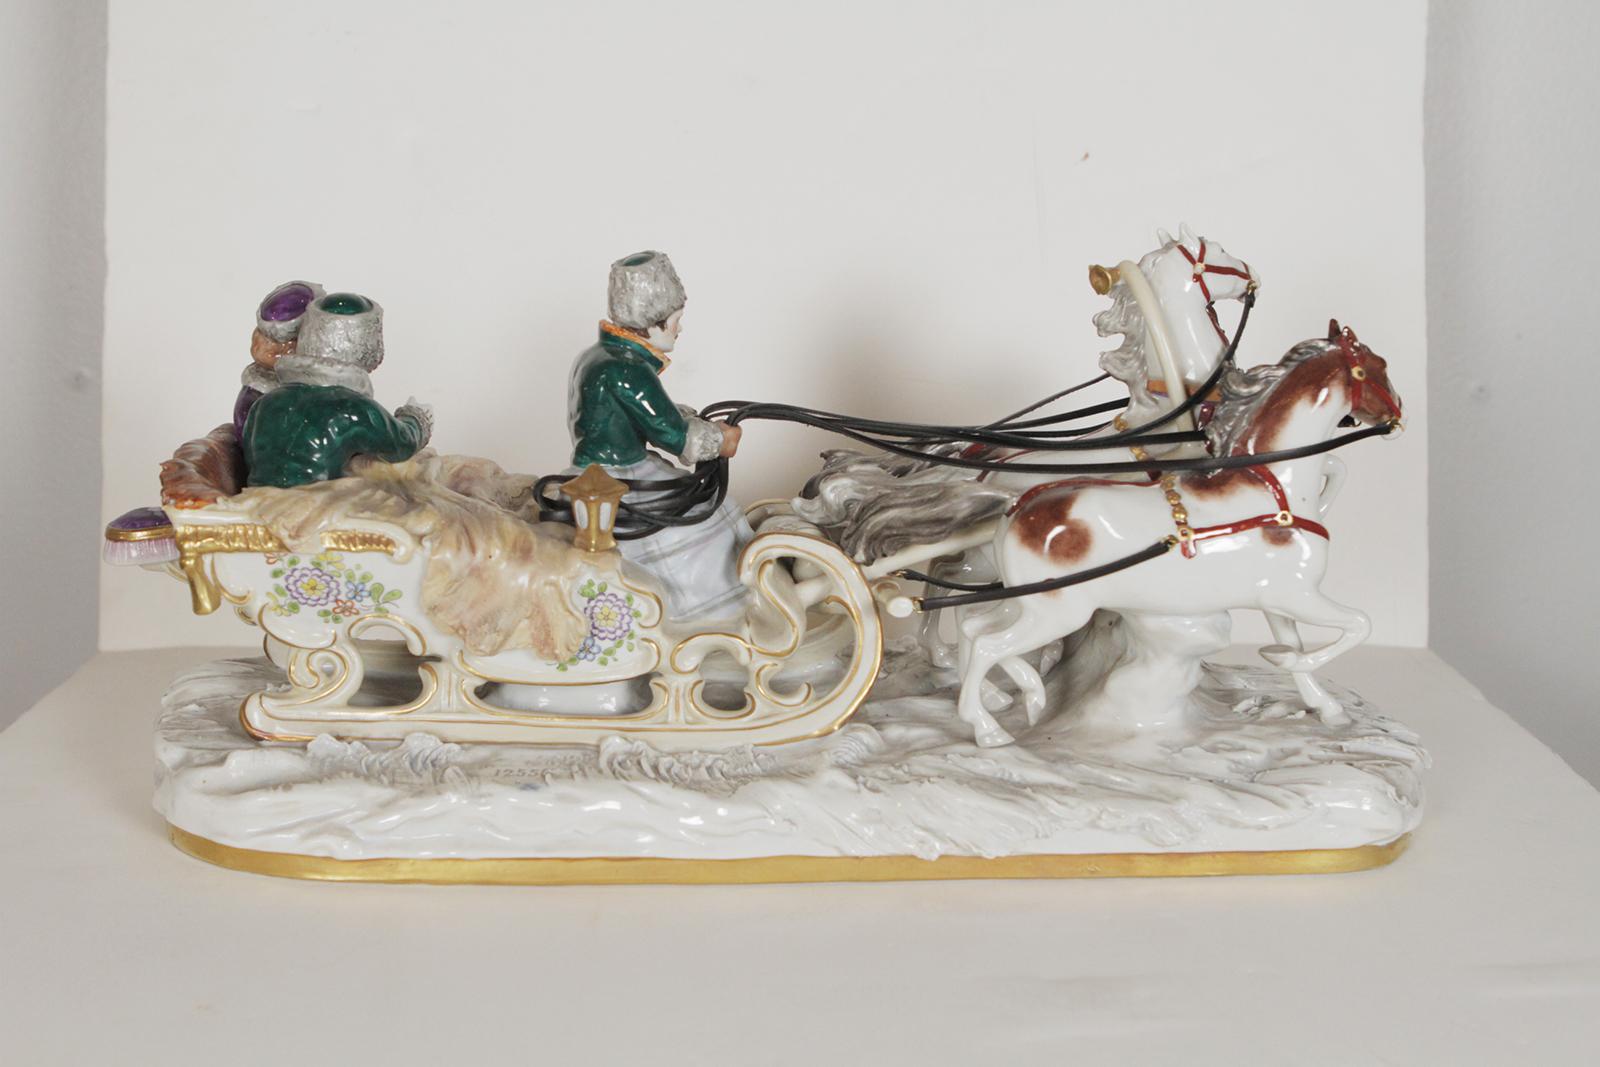 Scheibe-Ansbach Porcelain Figure. “St. Petersburg, Russia Sleigh Ride” 3